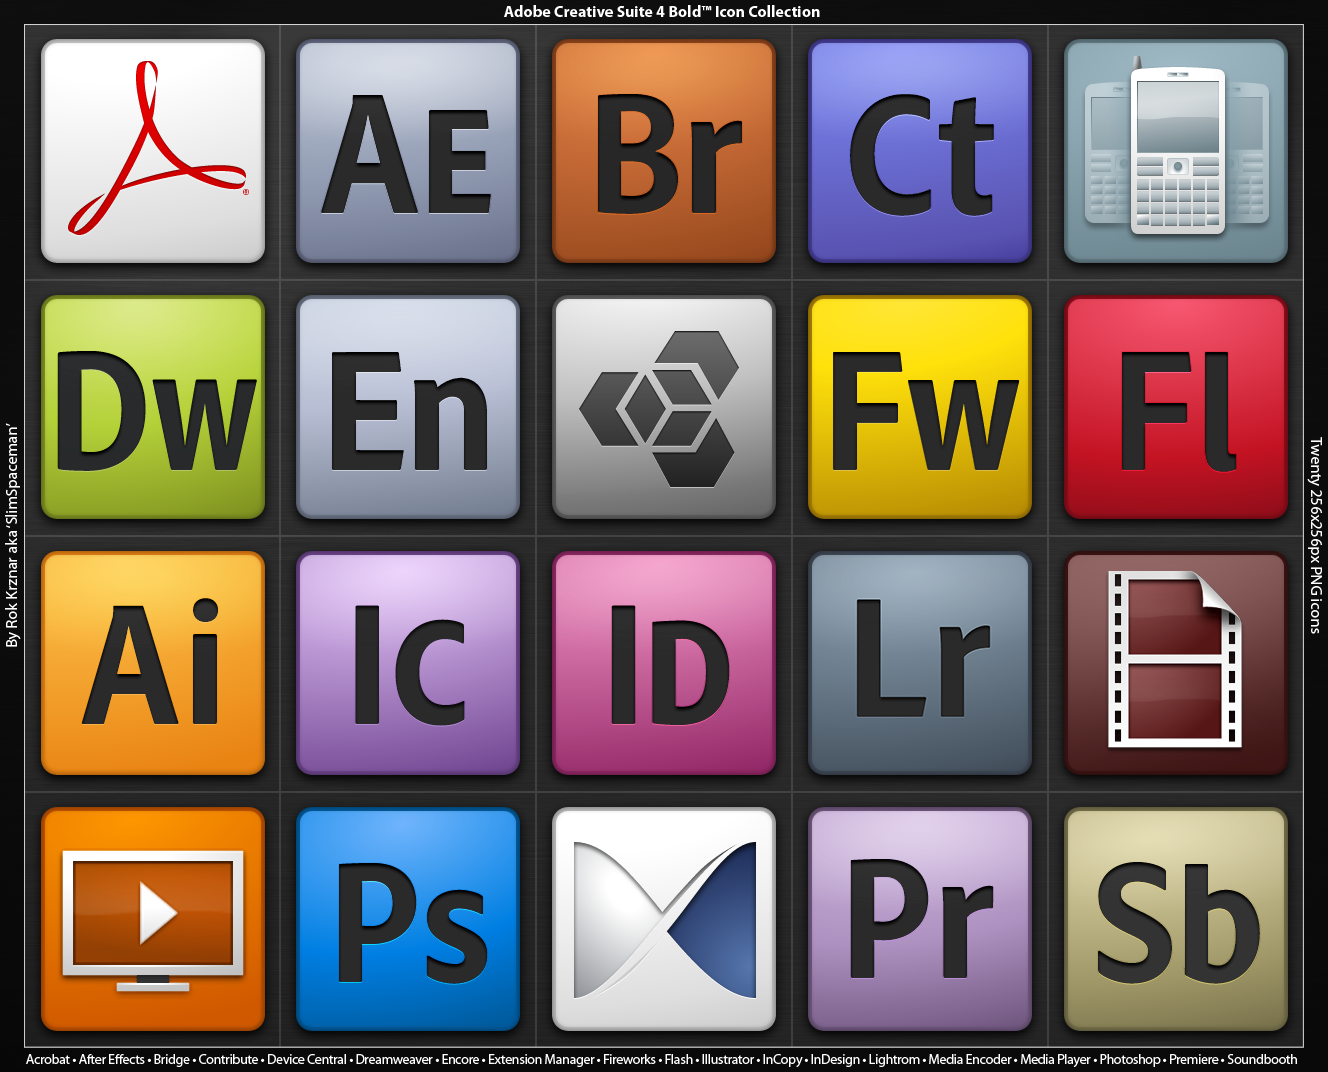 Adobe_Creative_Suite